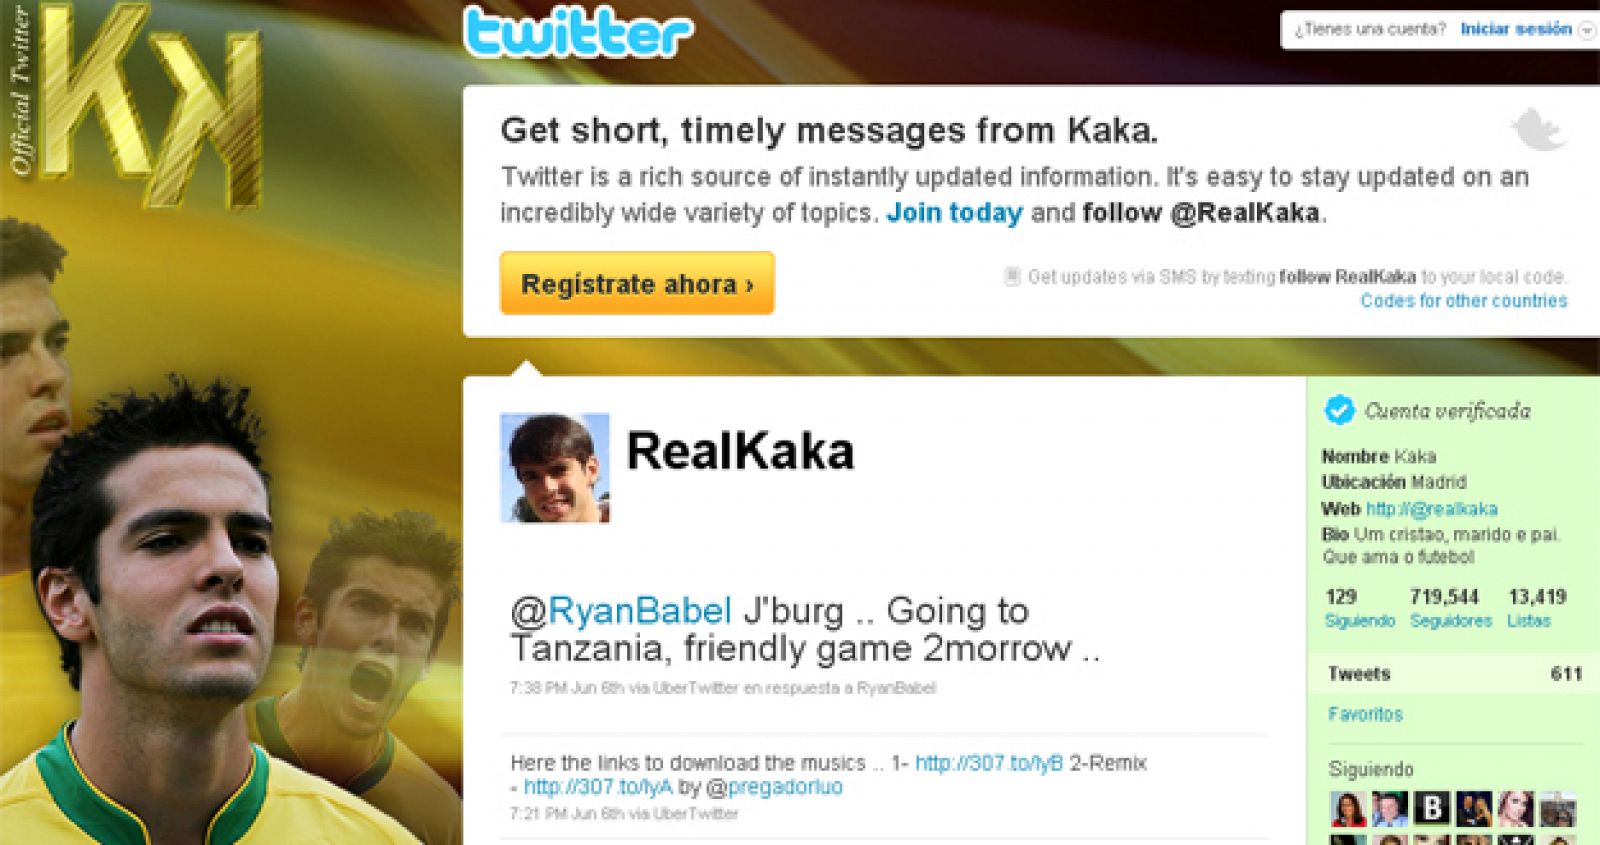 Imagen de portada del twitter personal del brasileño Kaká.